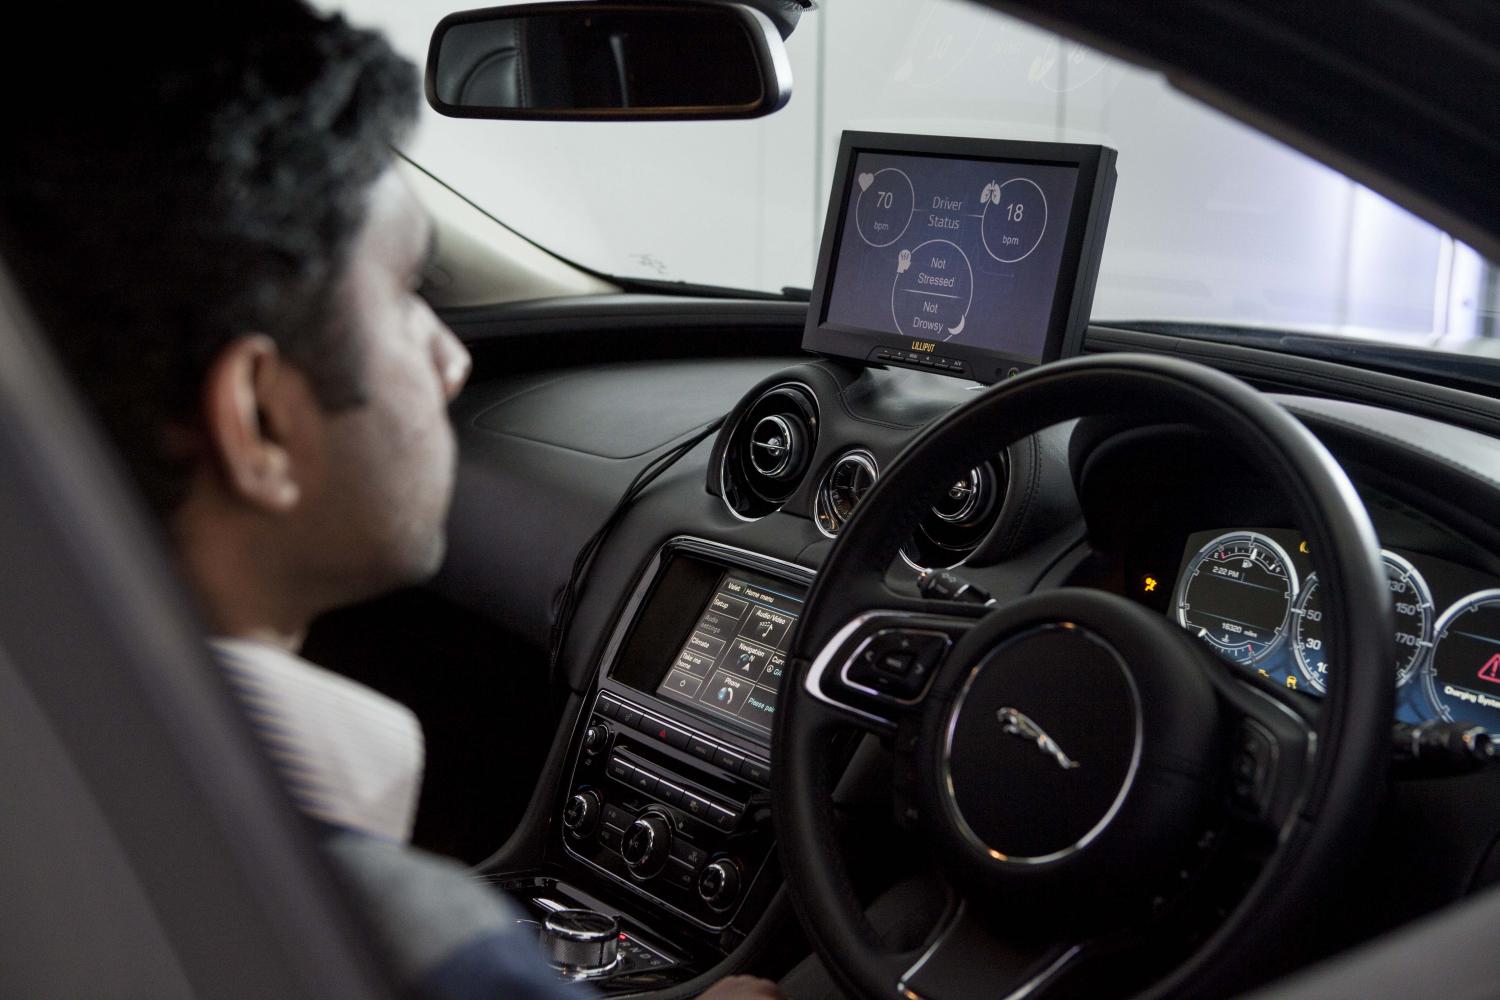 Jaguar Land Rover tech has car monitoring driver's concentration